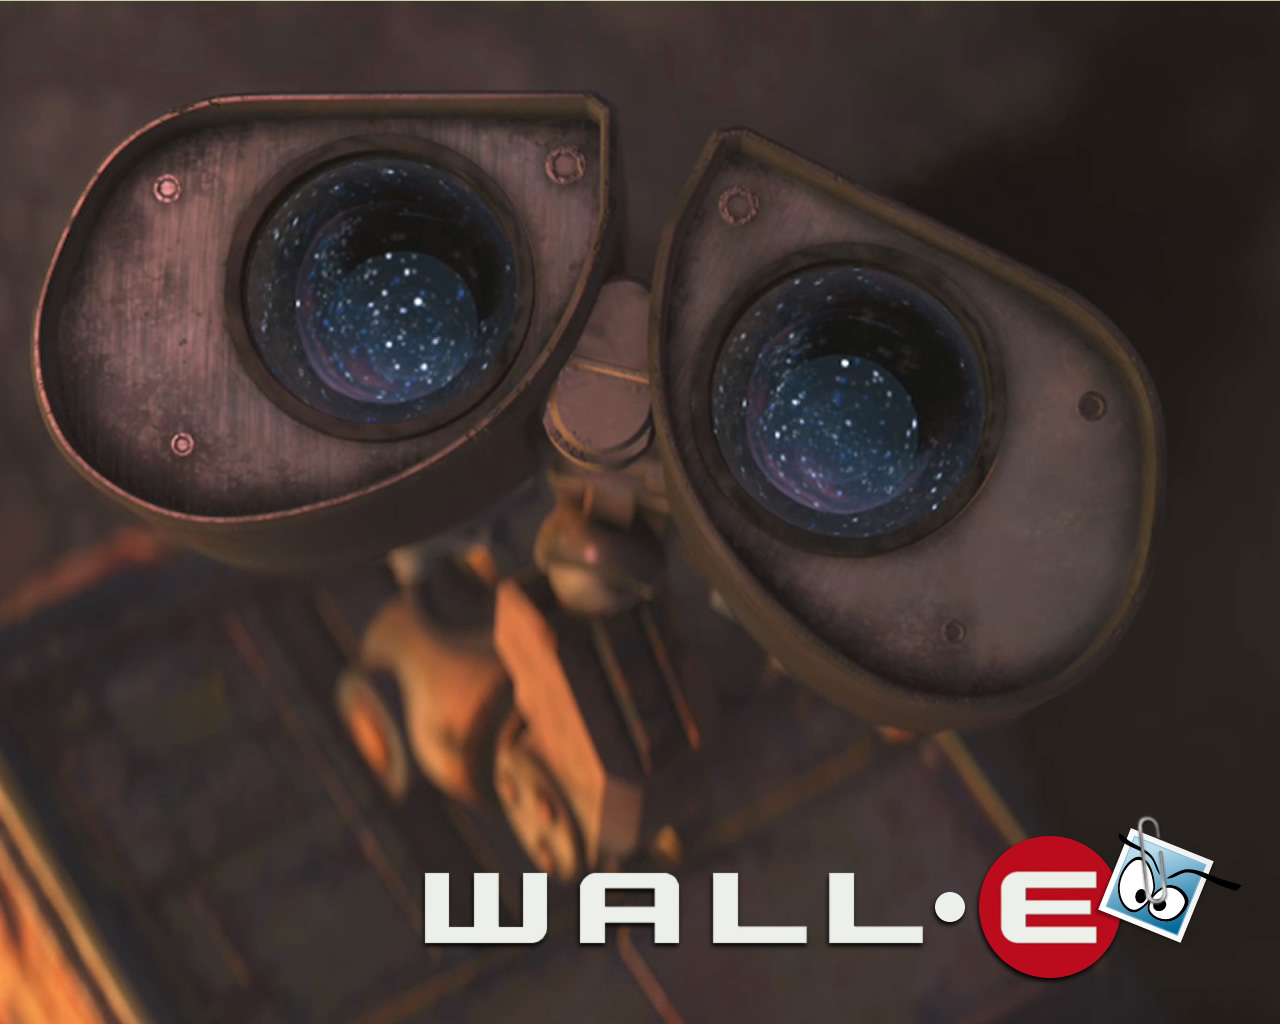 download wallpaper: Wall-E kijkt naar de sterren wallpaper